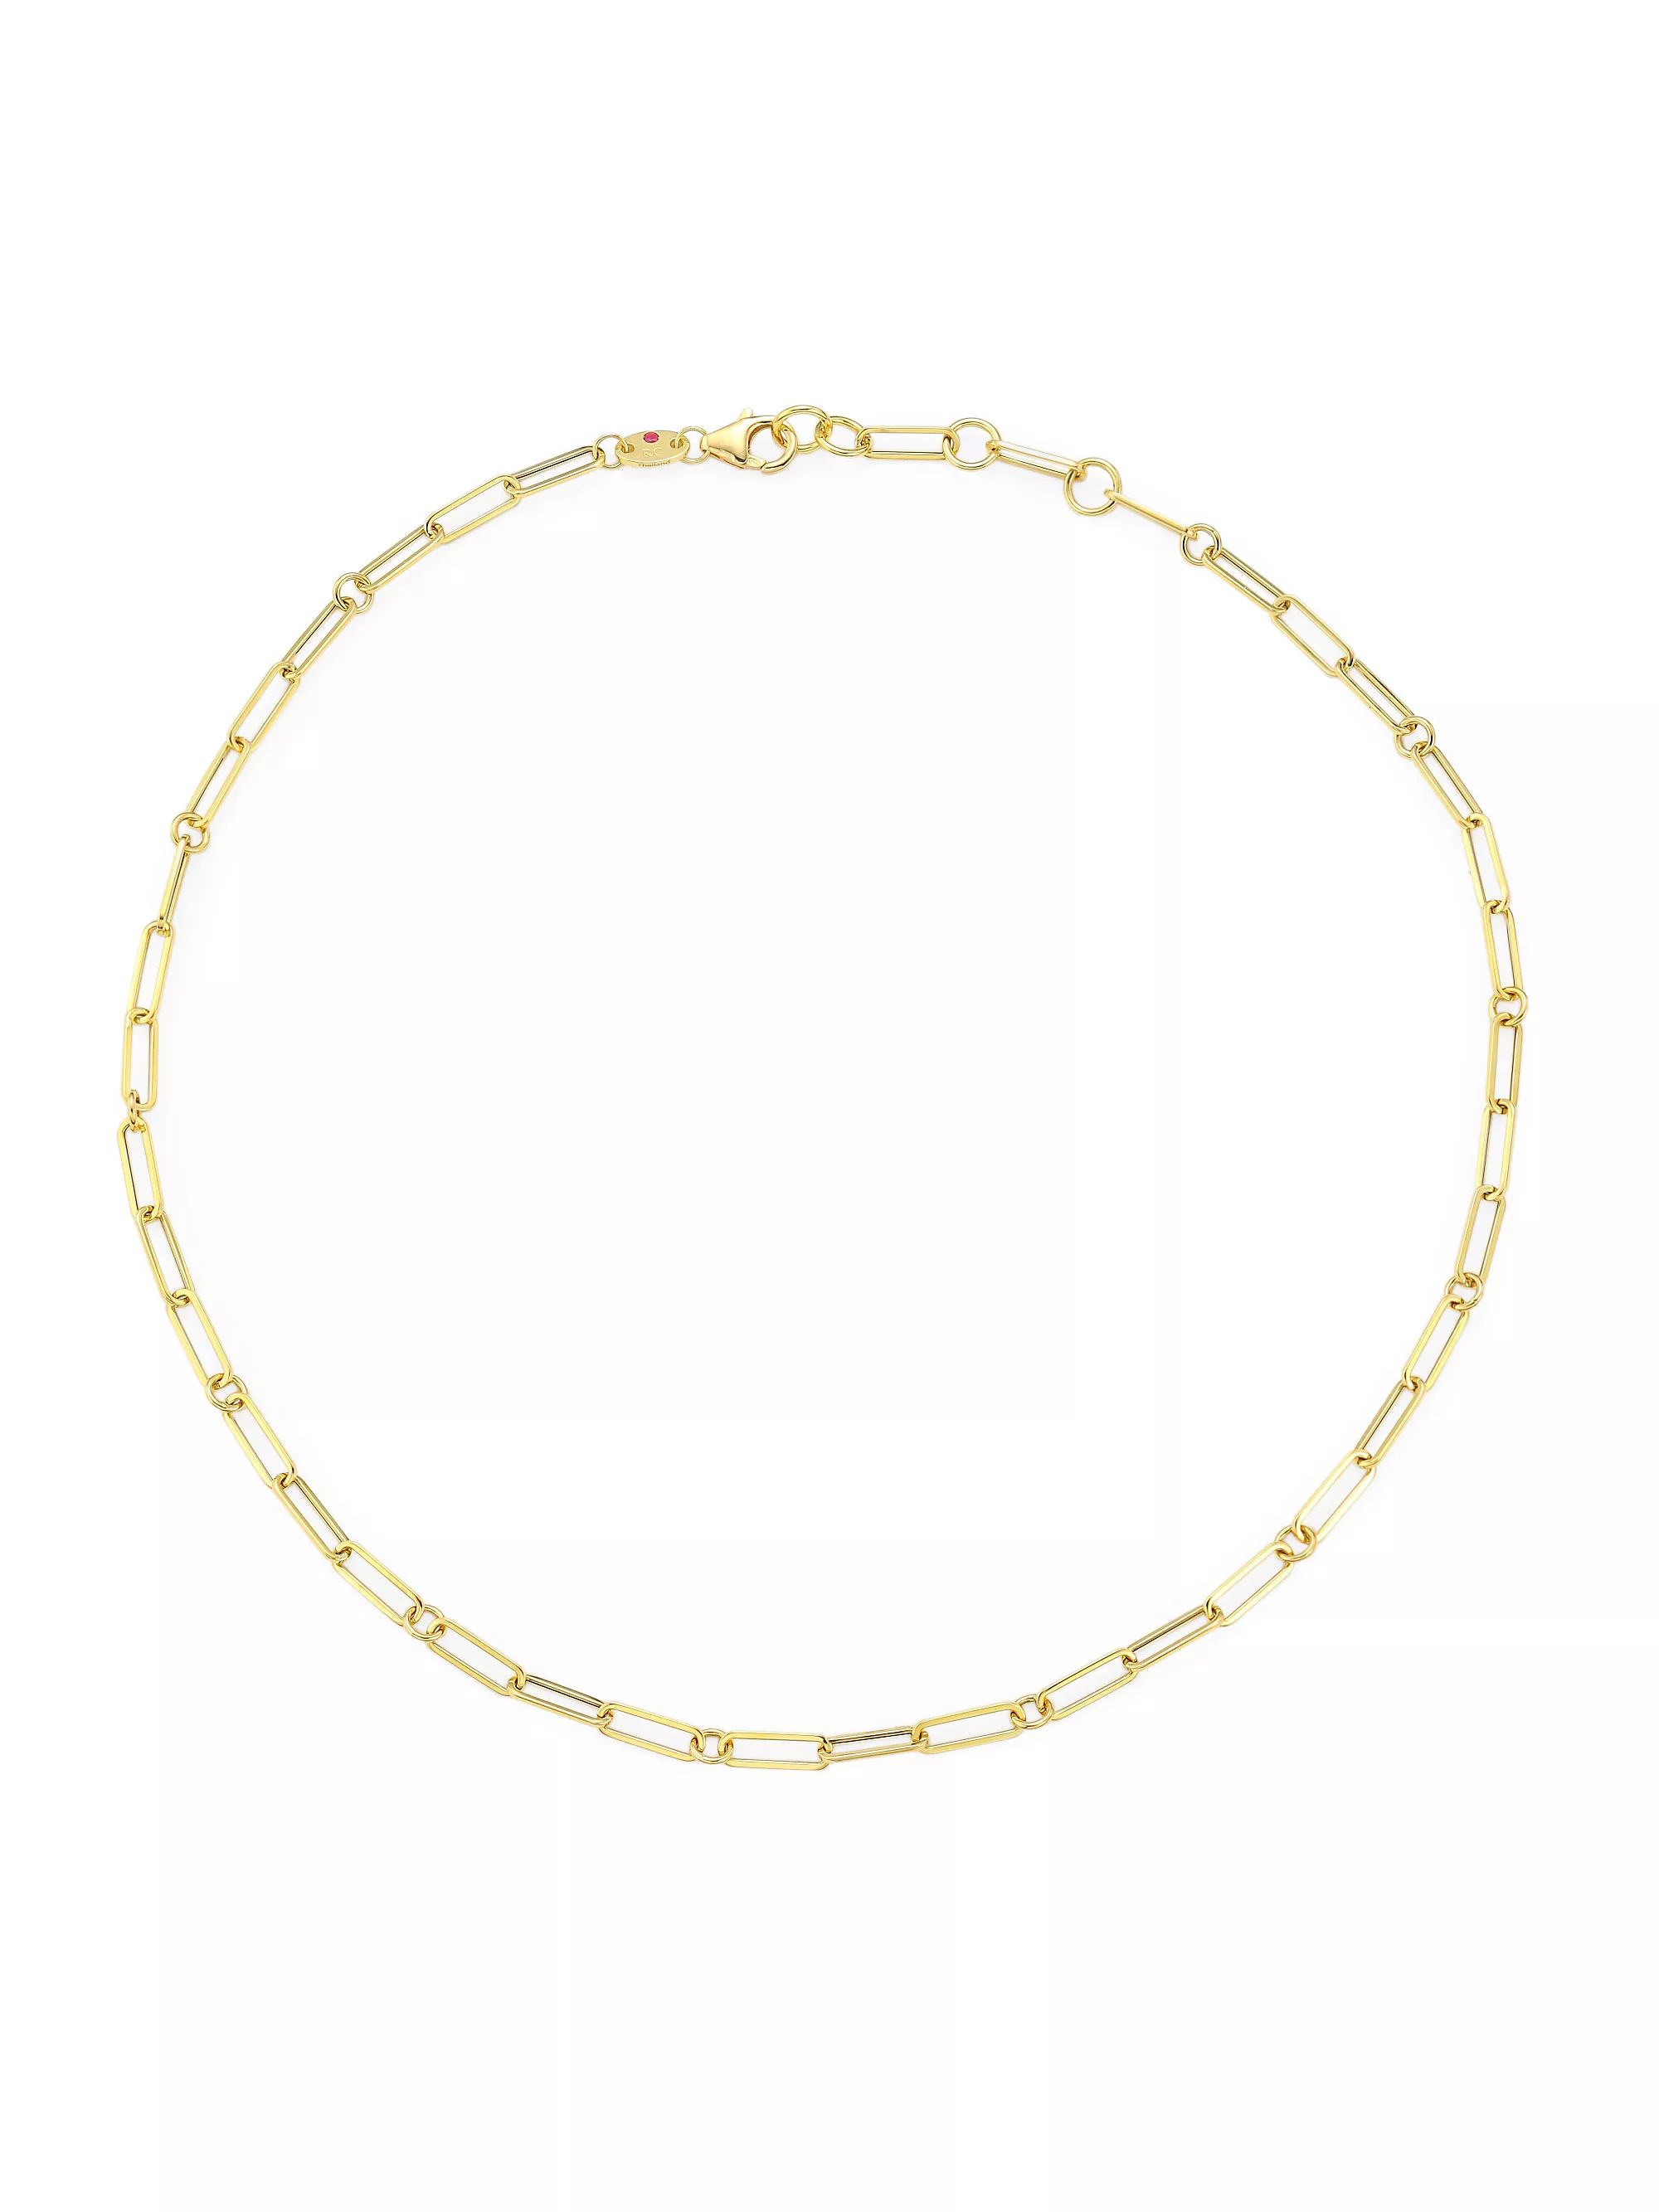 NecklacesChains & StrandsRoberto Coin18K Yellow Gold Paper Clip Chain Necklace, 17"$1,200 | Saks Fifth Avenue